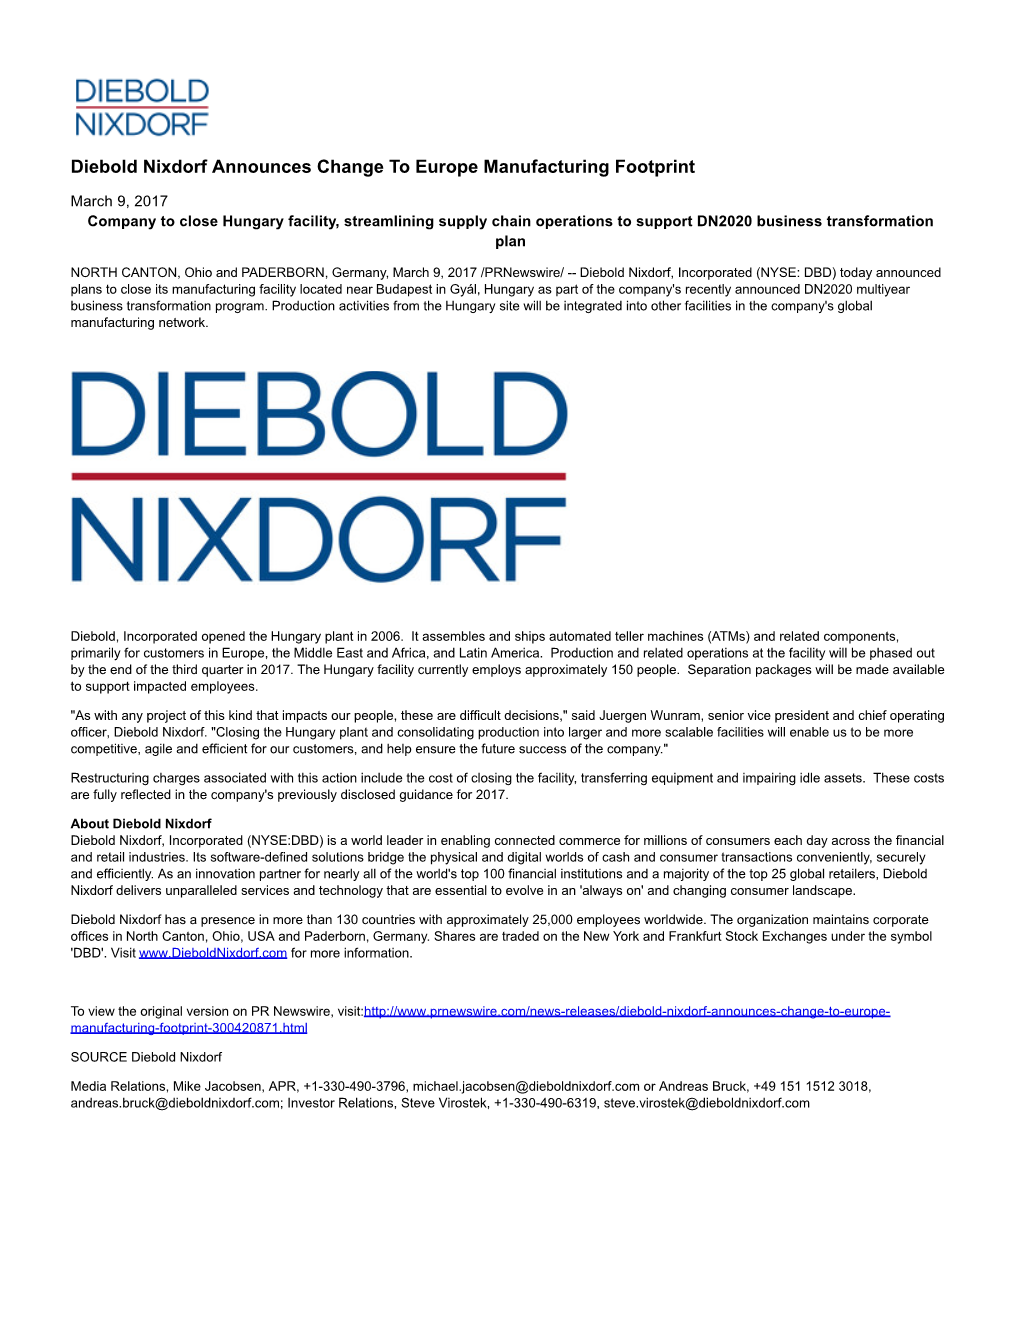 Diebold Nixdorf Announces Change to Europe Manufacturing Footprint